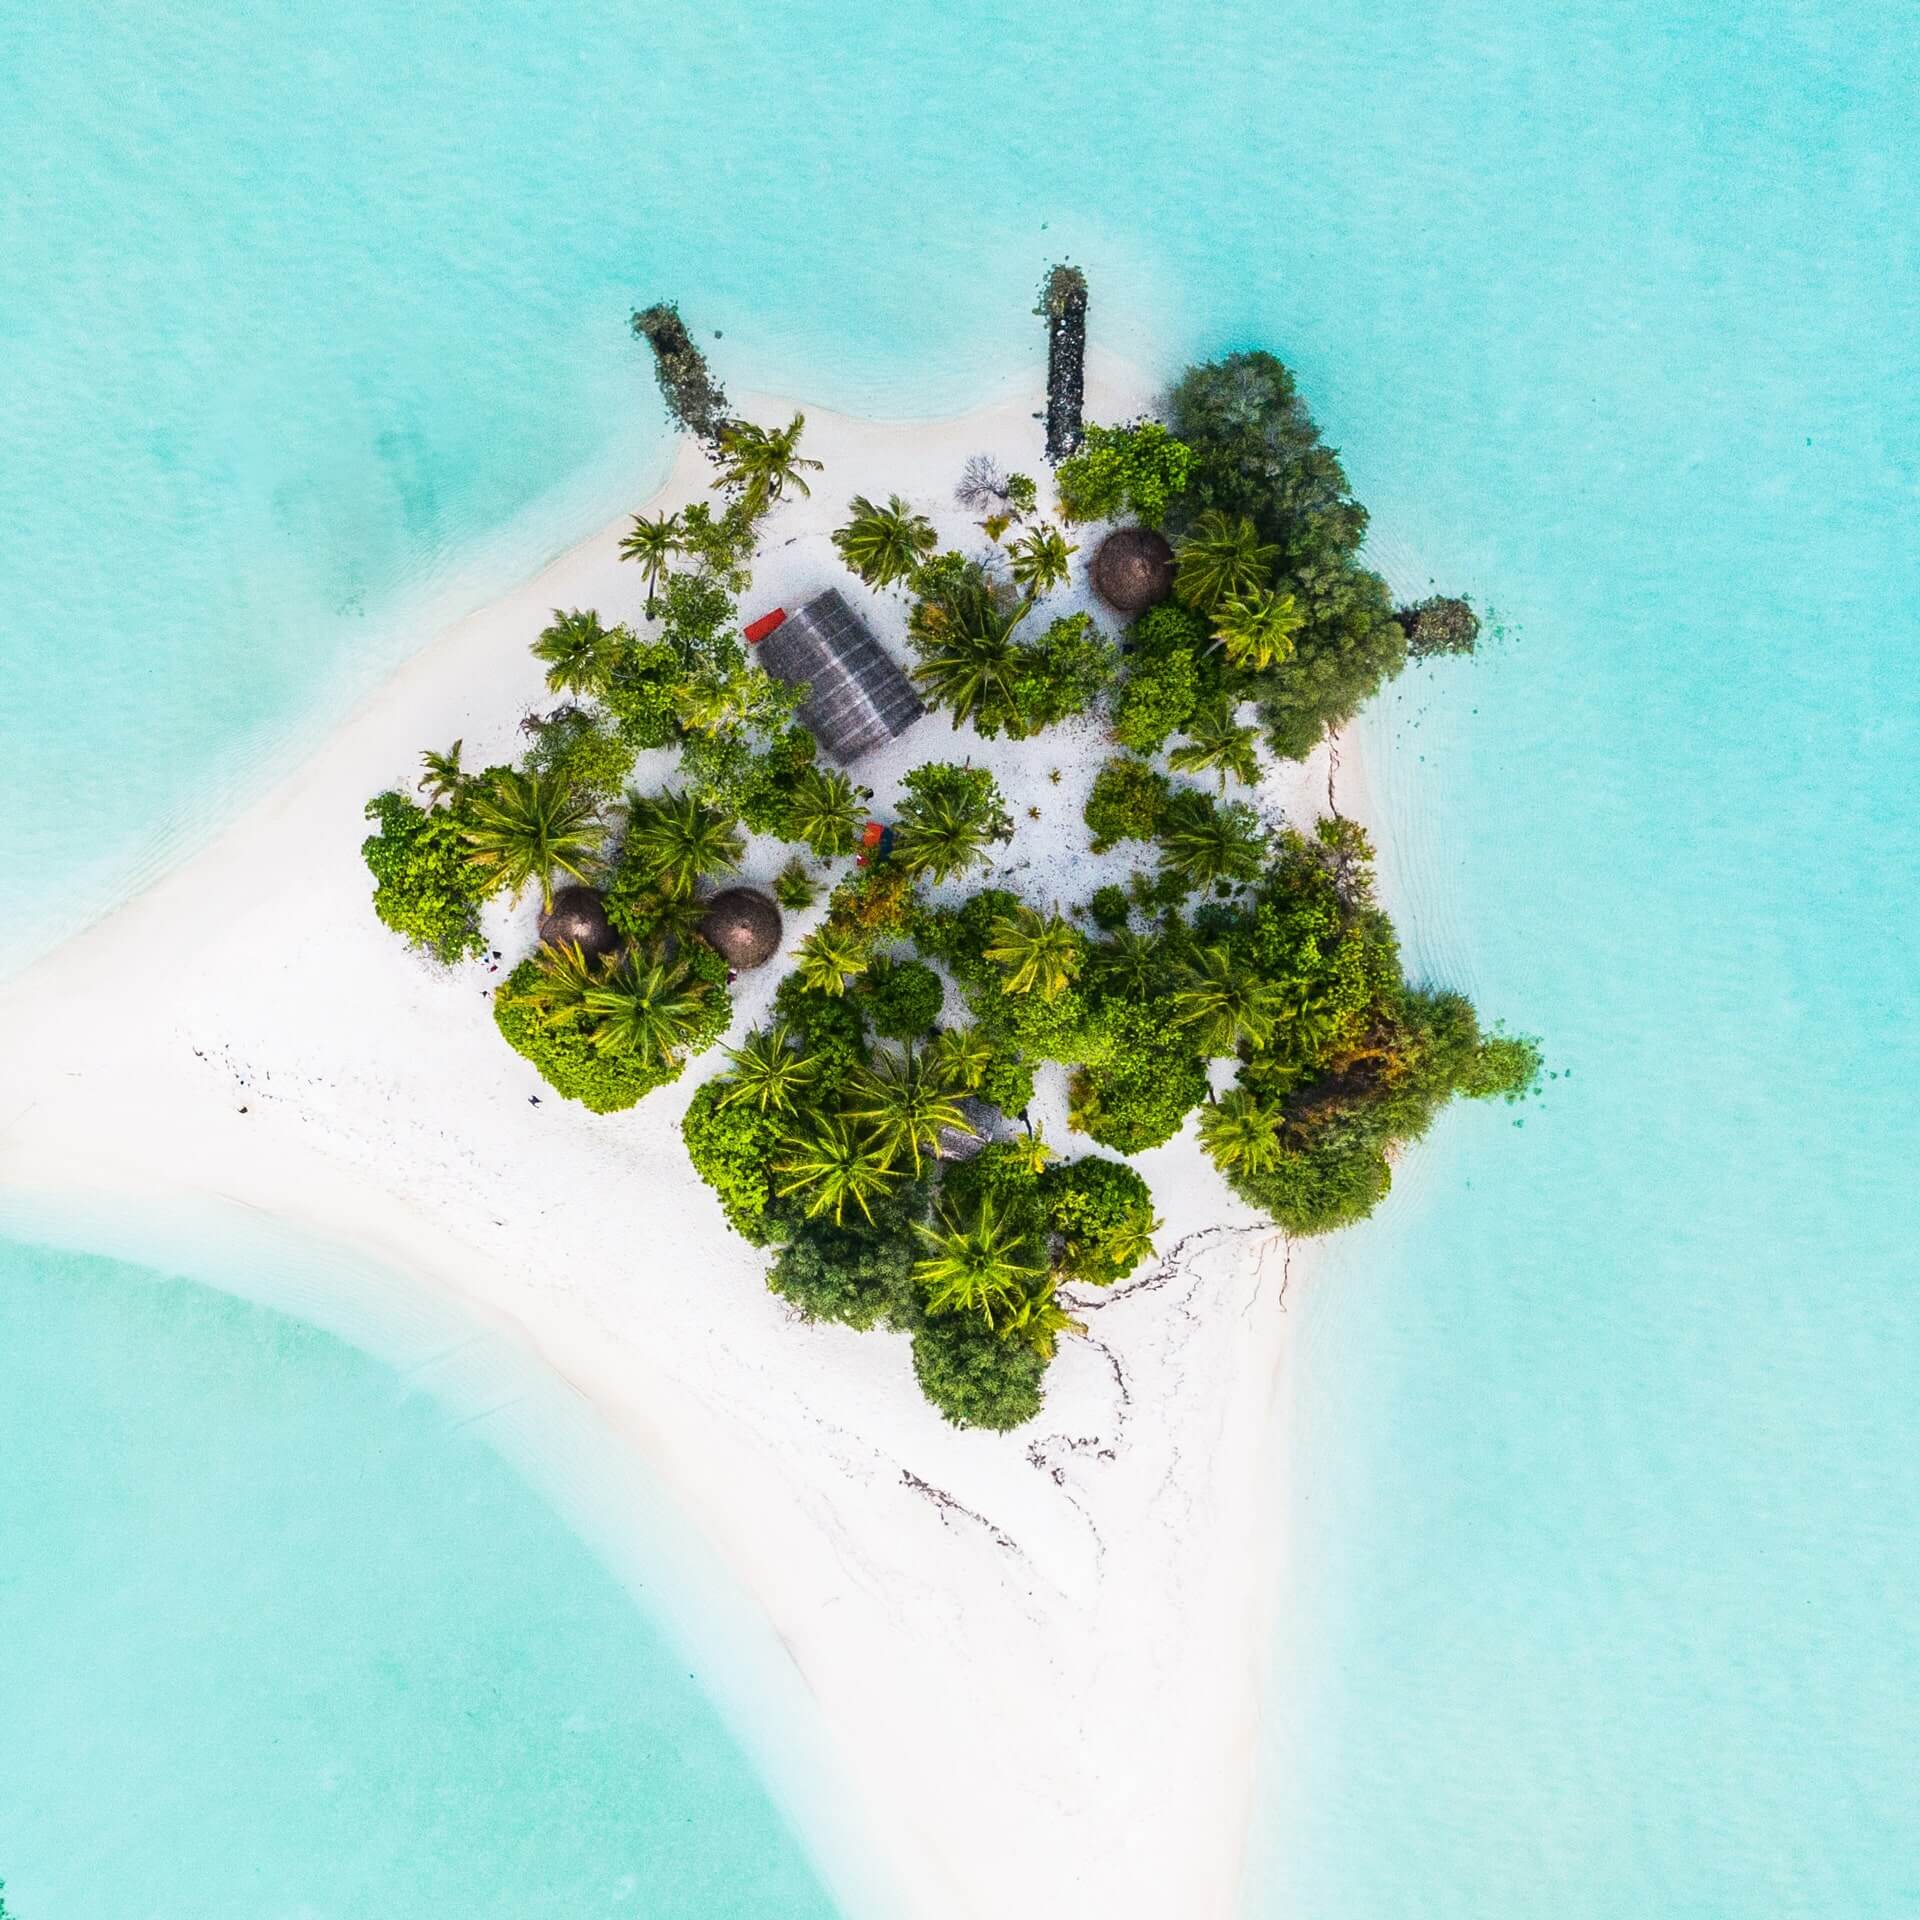 Private islands